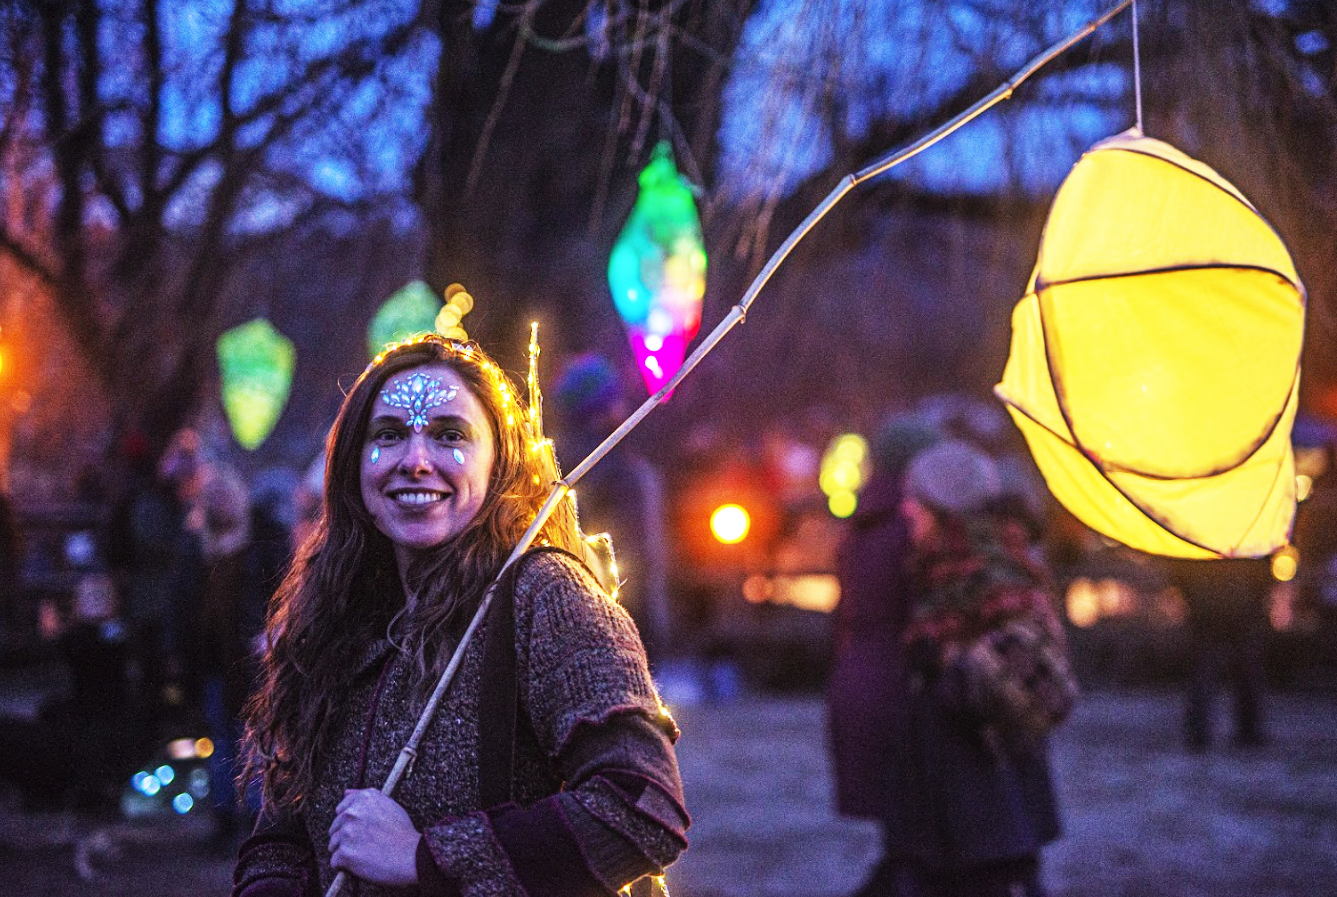 Polka Dot Dragon Lantern Festival lights up Rotary Lakeside Park